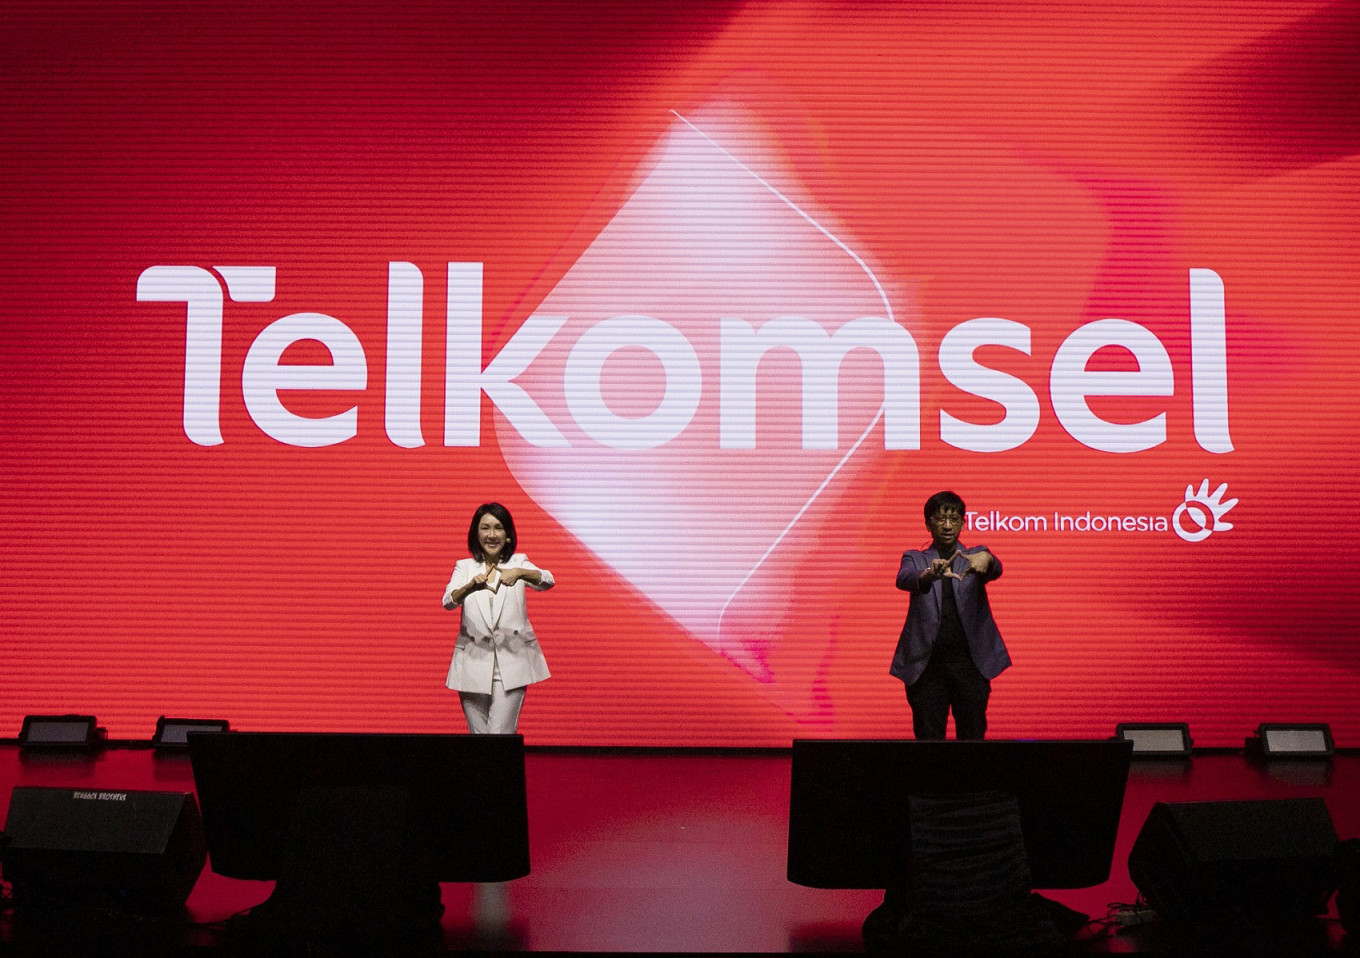 Beyond Logos Telkomsel S New Identity A Symbol Of Change Philosophy Inforial The Jakarta Post